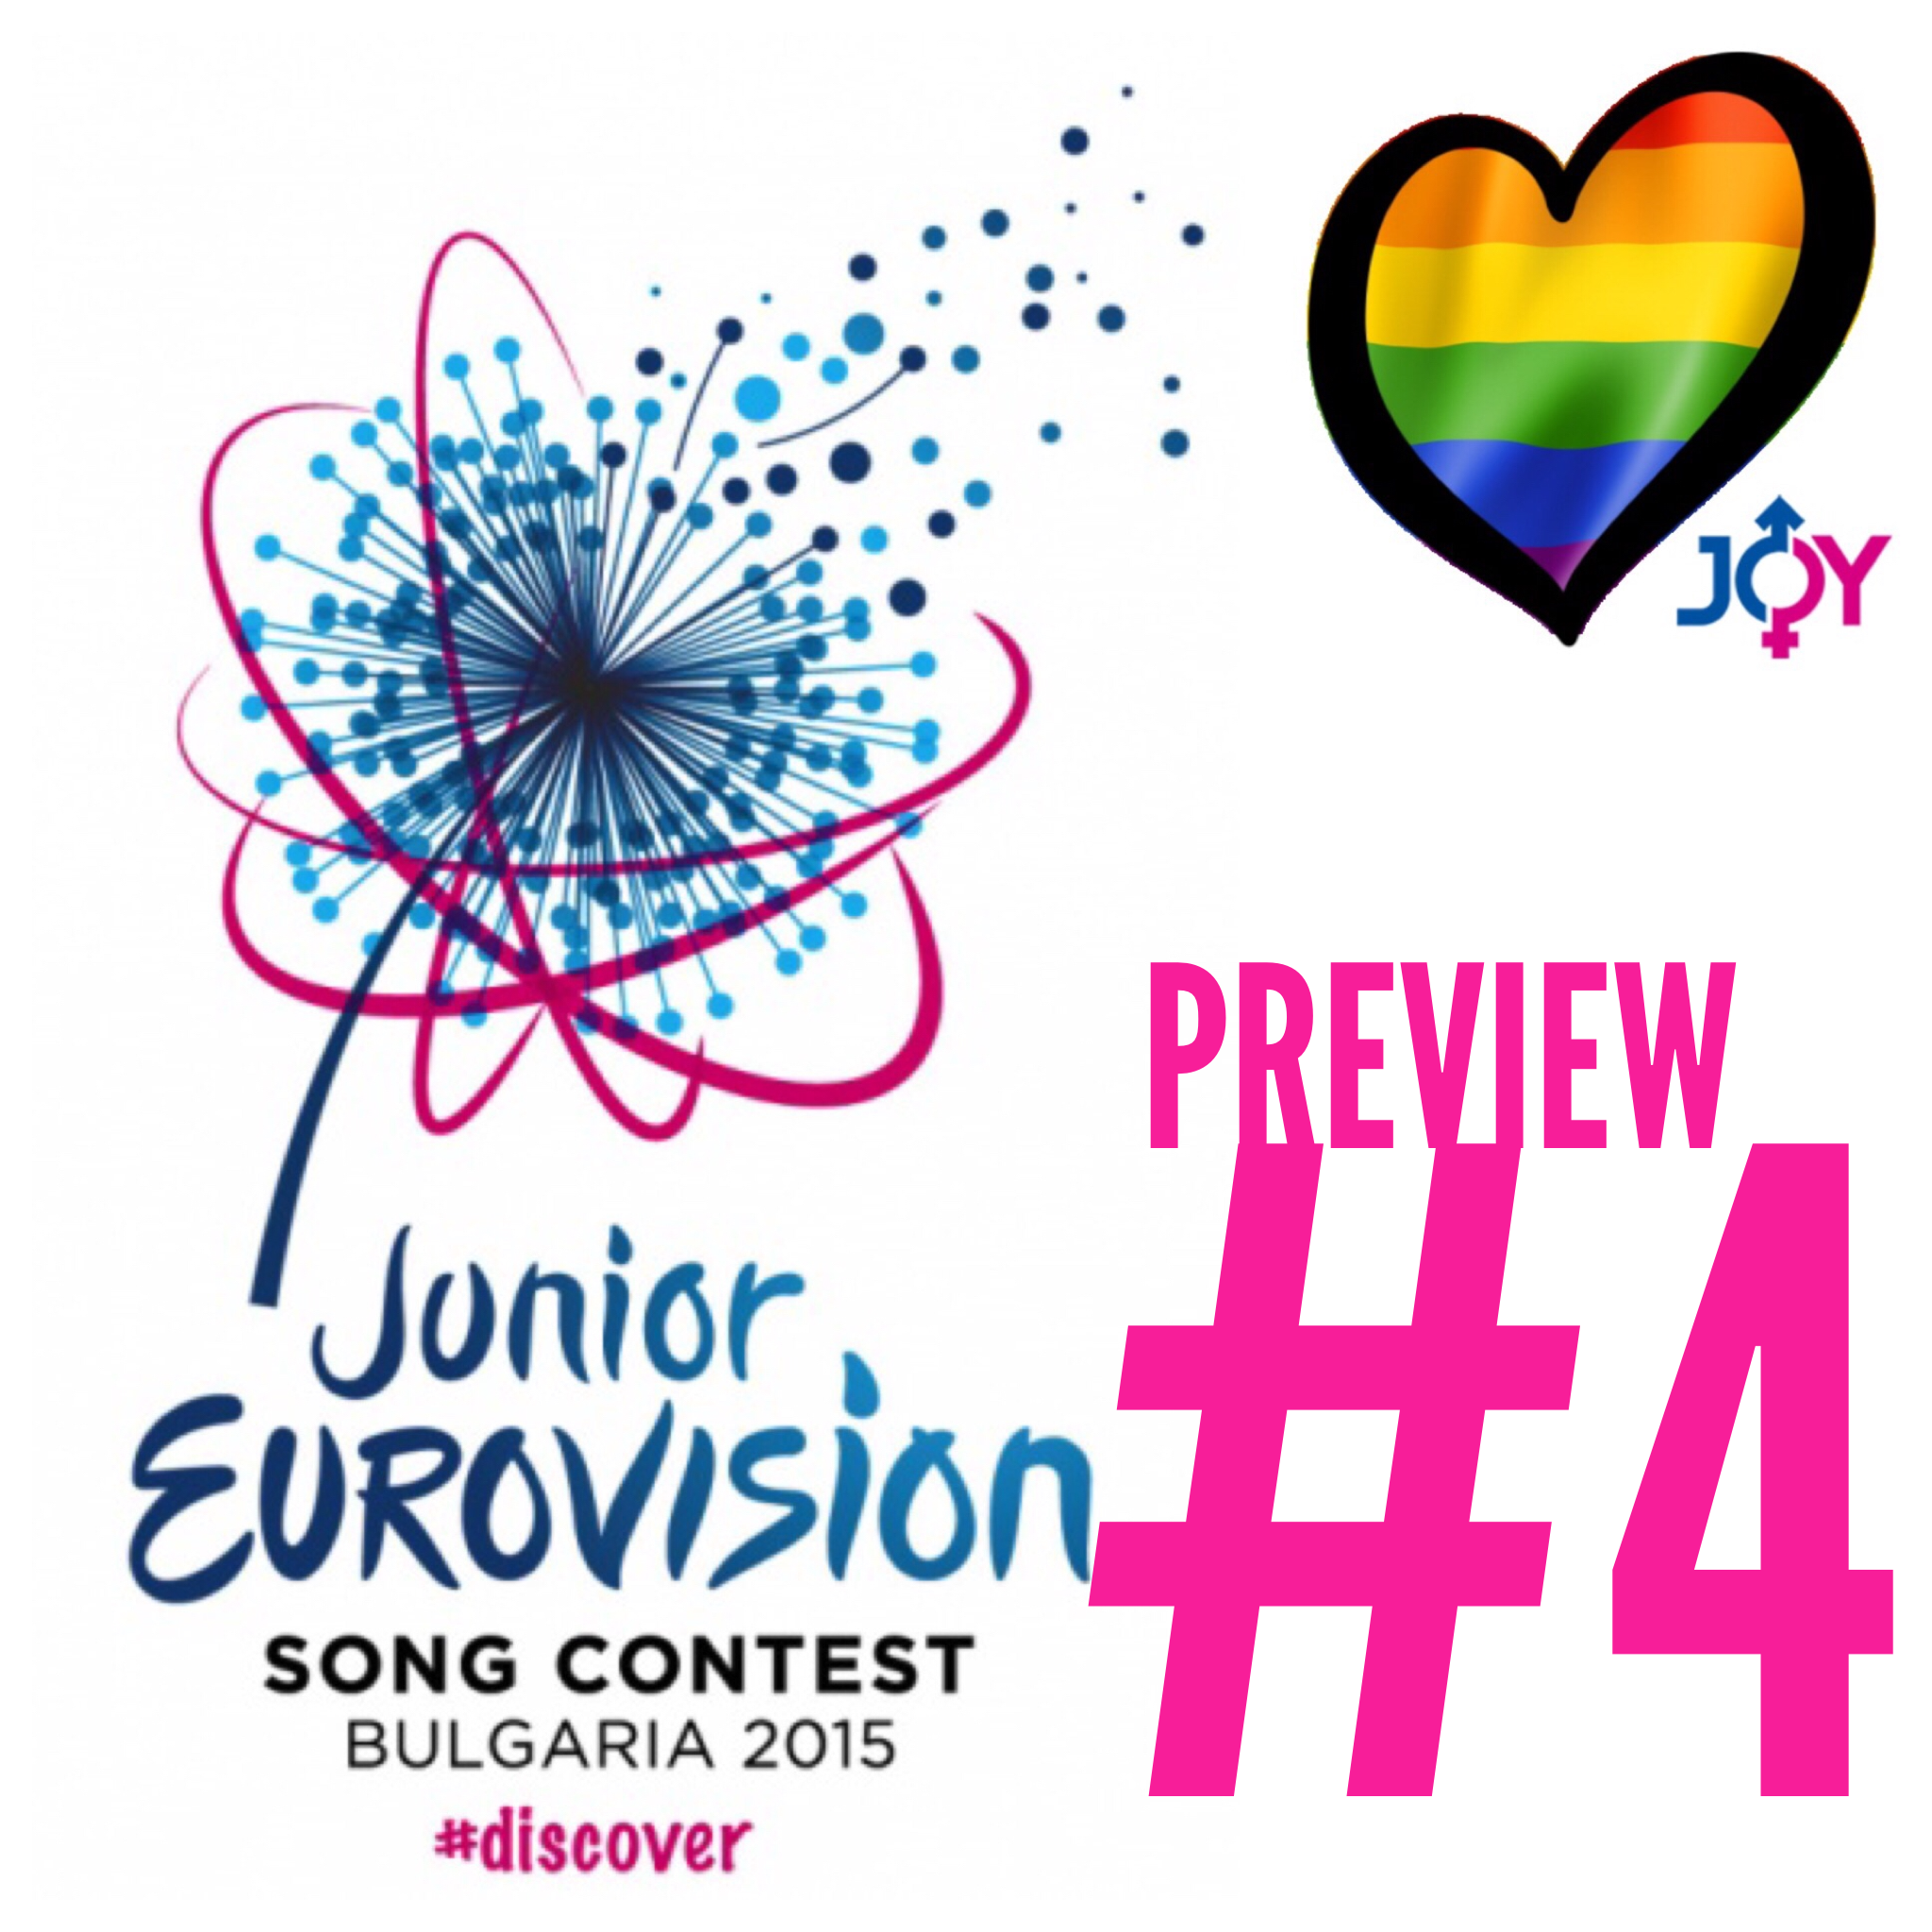 Junior Eurovision 2015: Preview #4